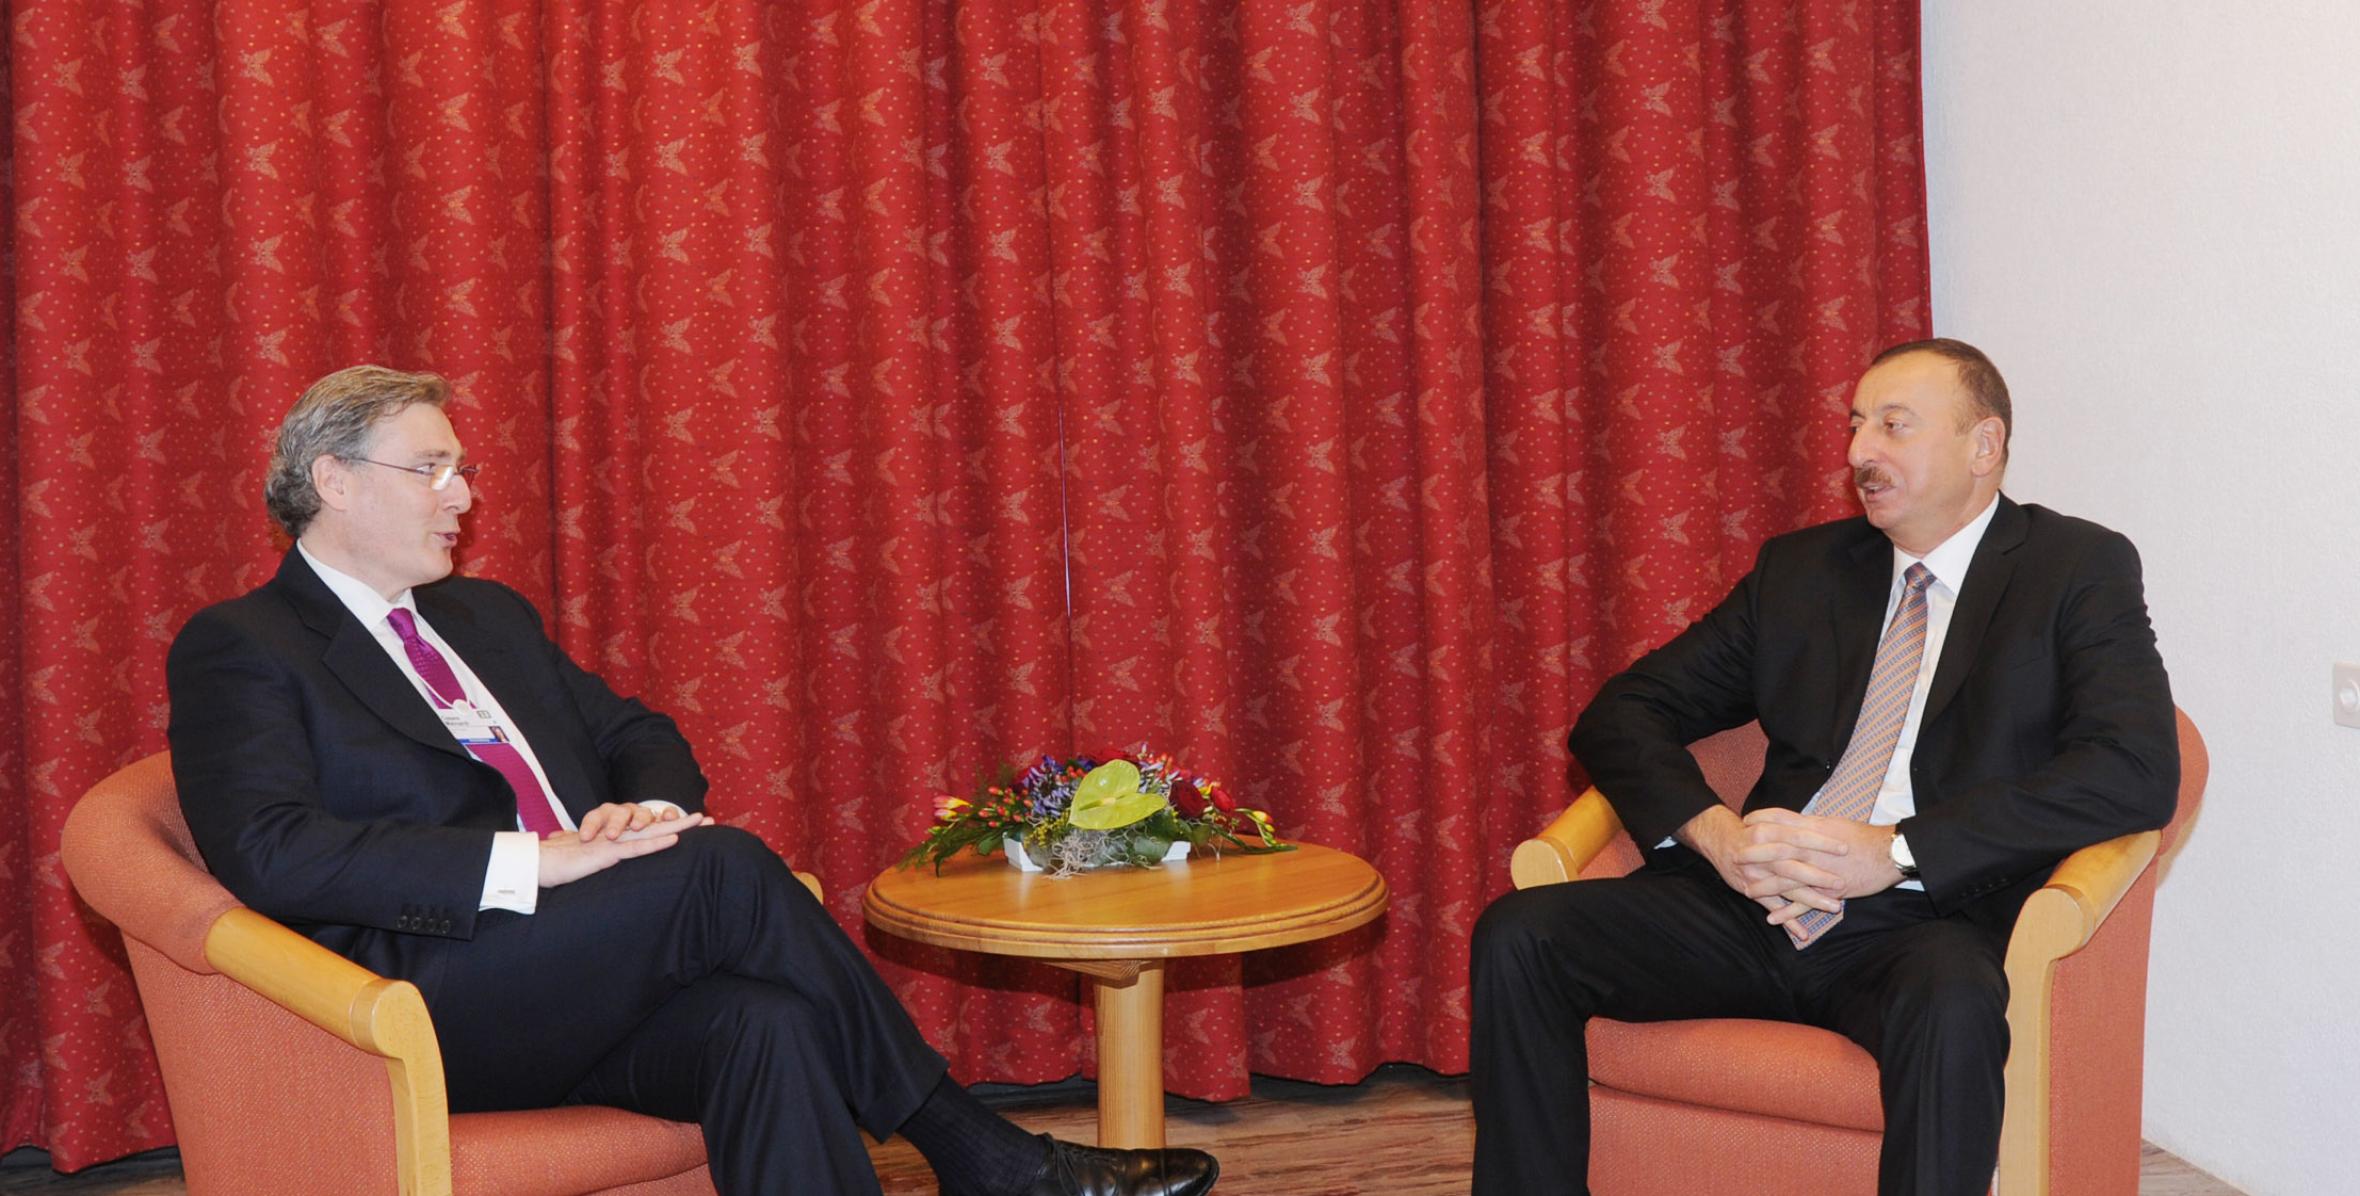 Ilham Aliyev met with Chief Executive Officer of “Booz & Company” Cesare Mainardi